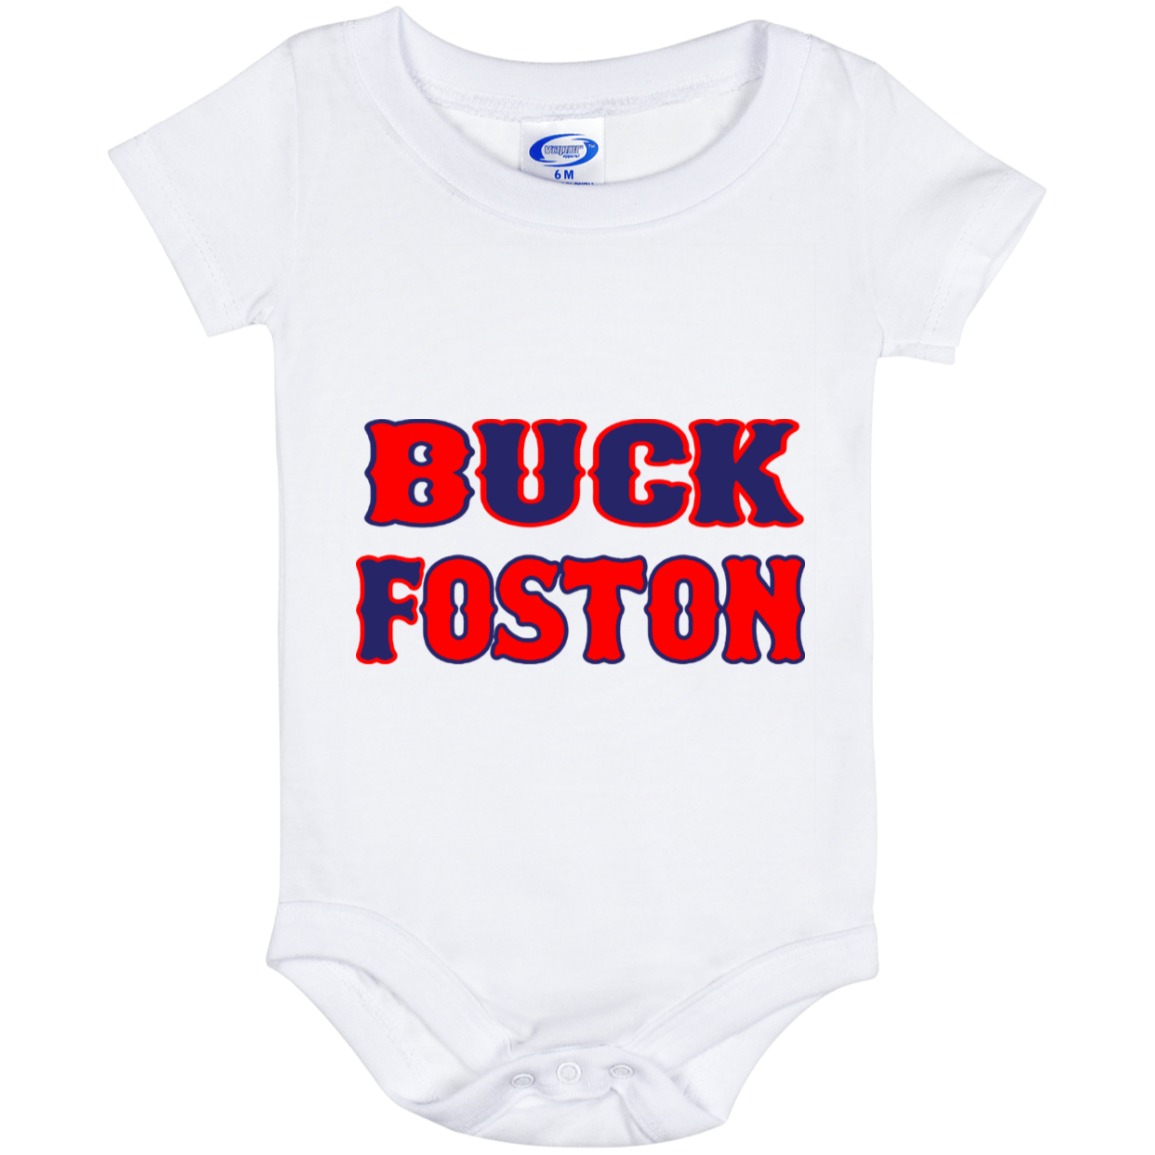 ArtichokeUSA Custom Design. BUCK FOSTON. Baby Onesie 6 Month